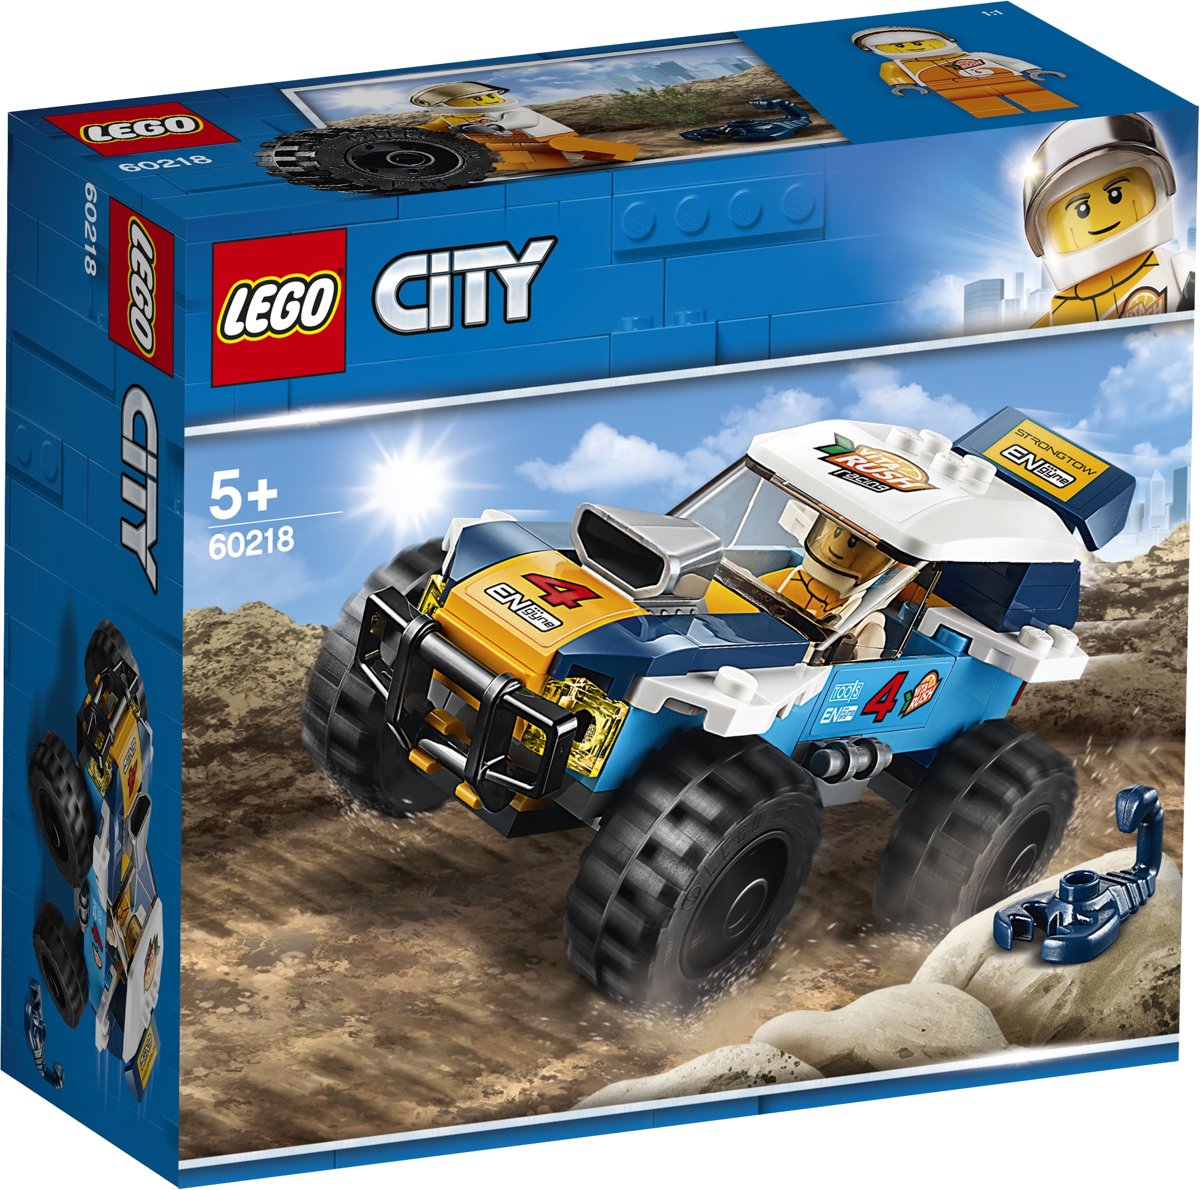   City Woestijn Rallywagen - 60218